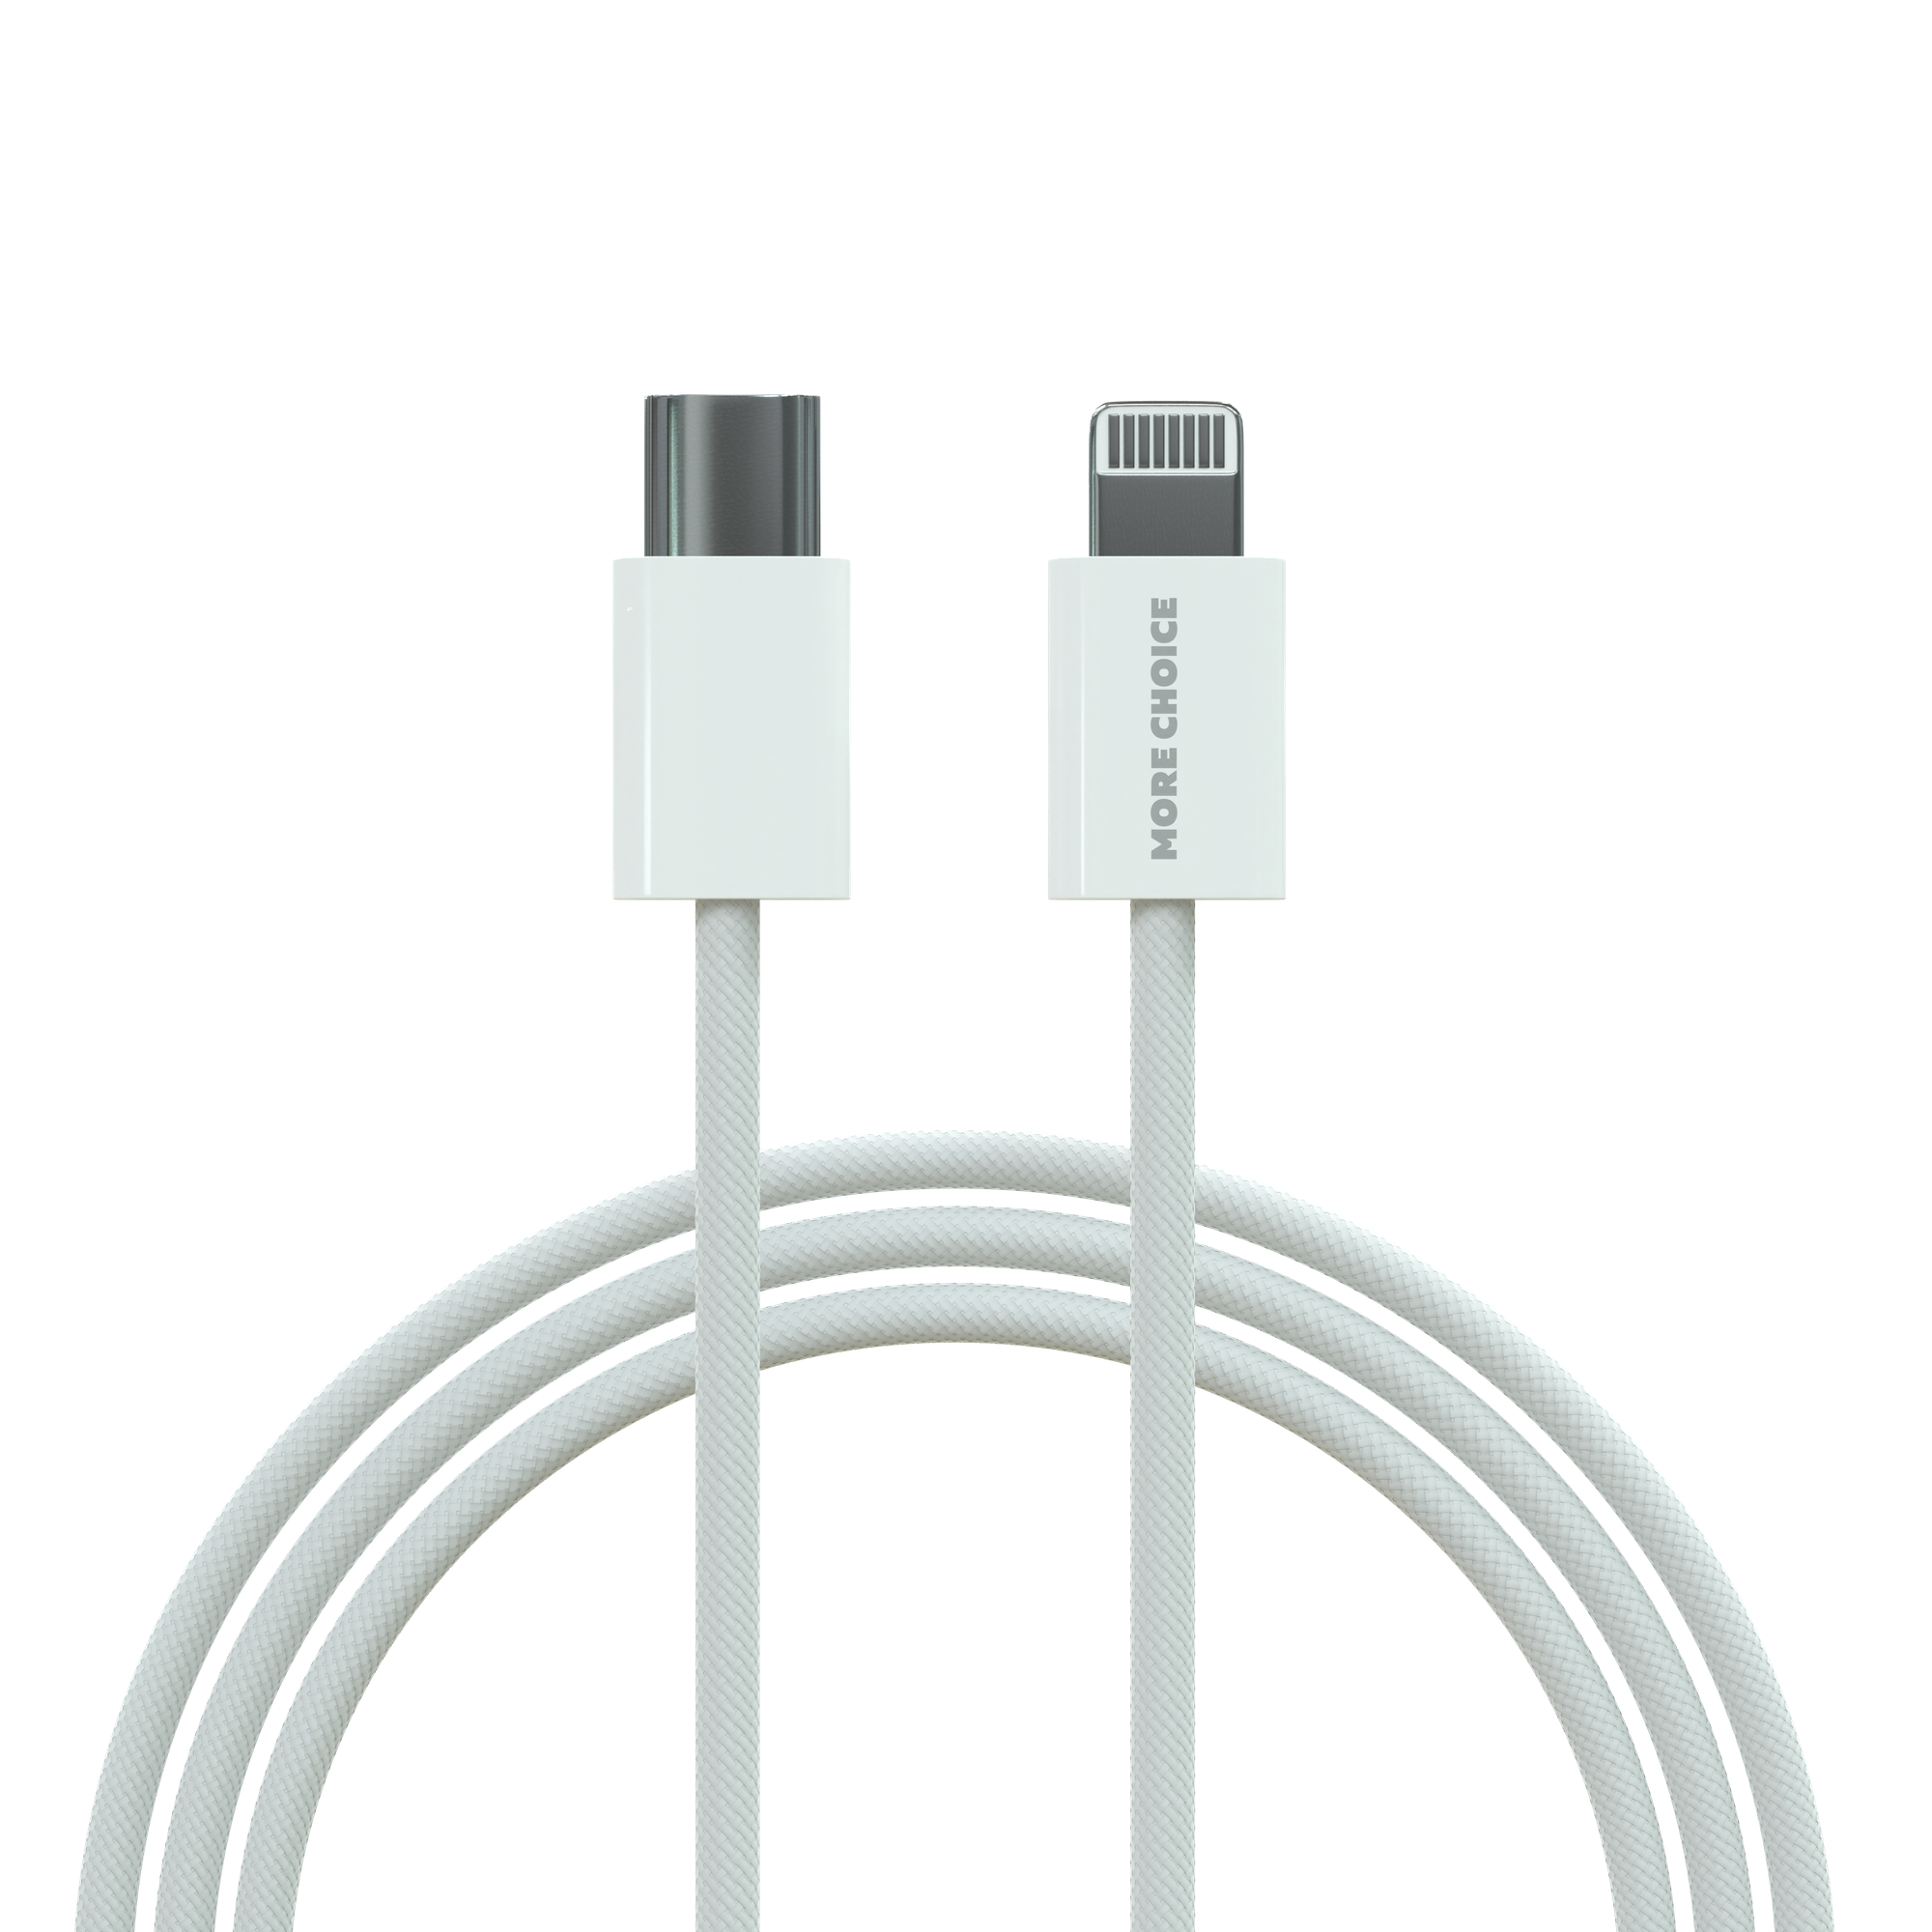 PURE Дата-кабель USB 3.0A PD 20W для Lighting 8-pin Type-C More choice K73i нейлон 1м White